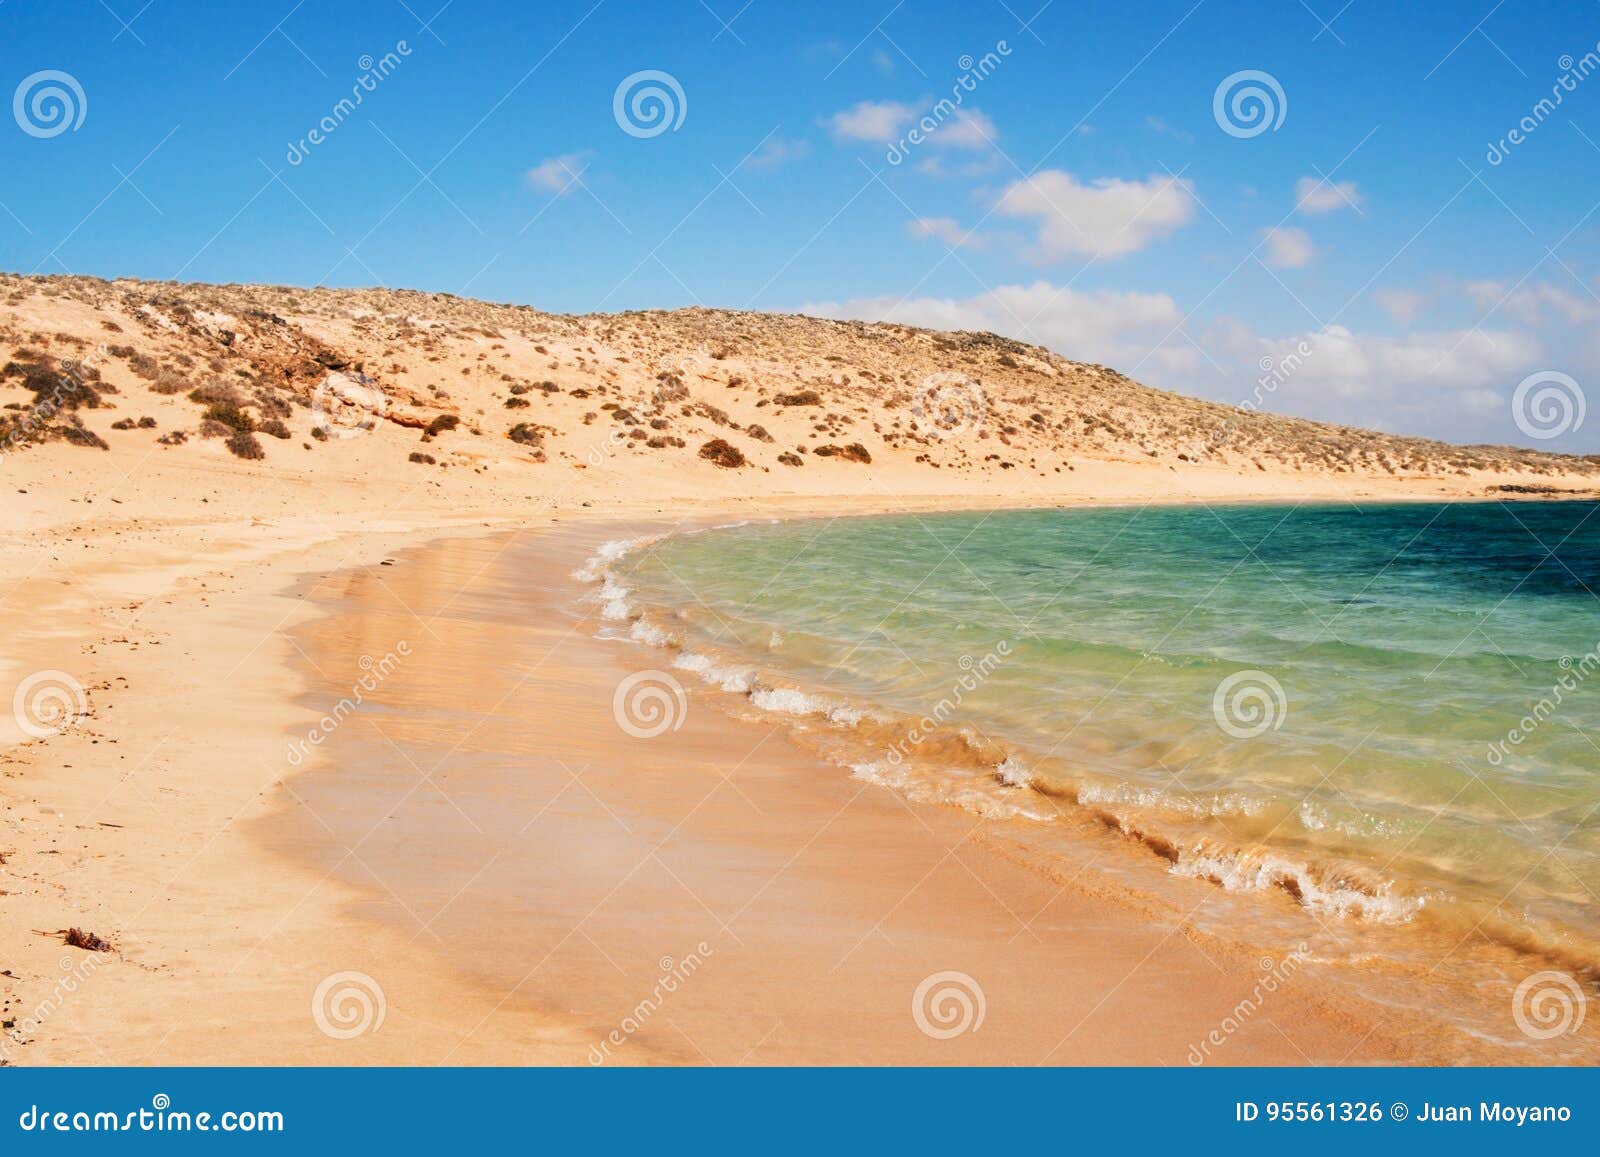 la francesa beach in la graciosa, canary islands, spain